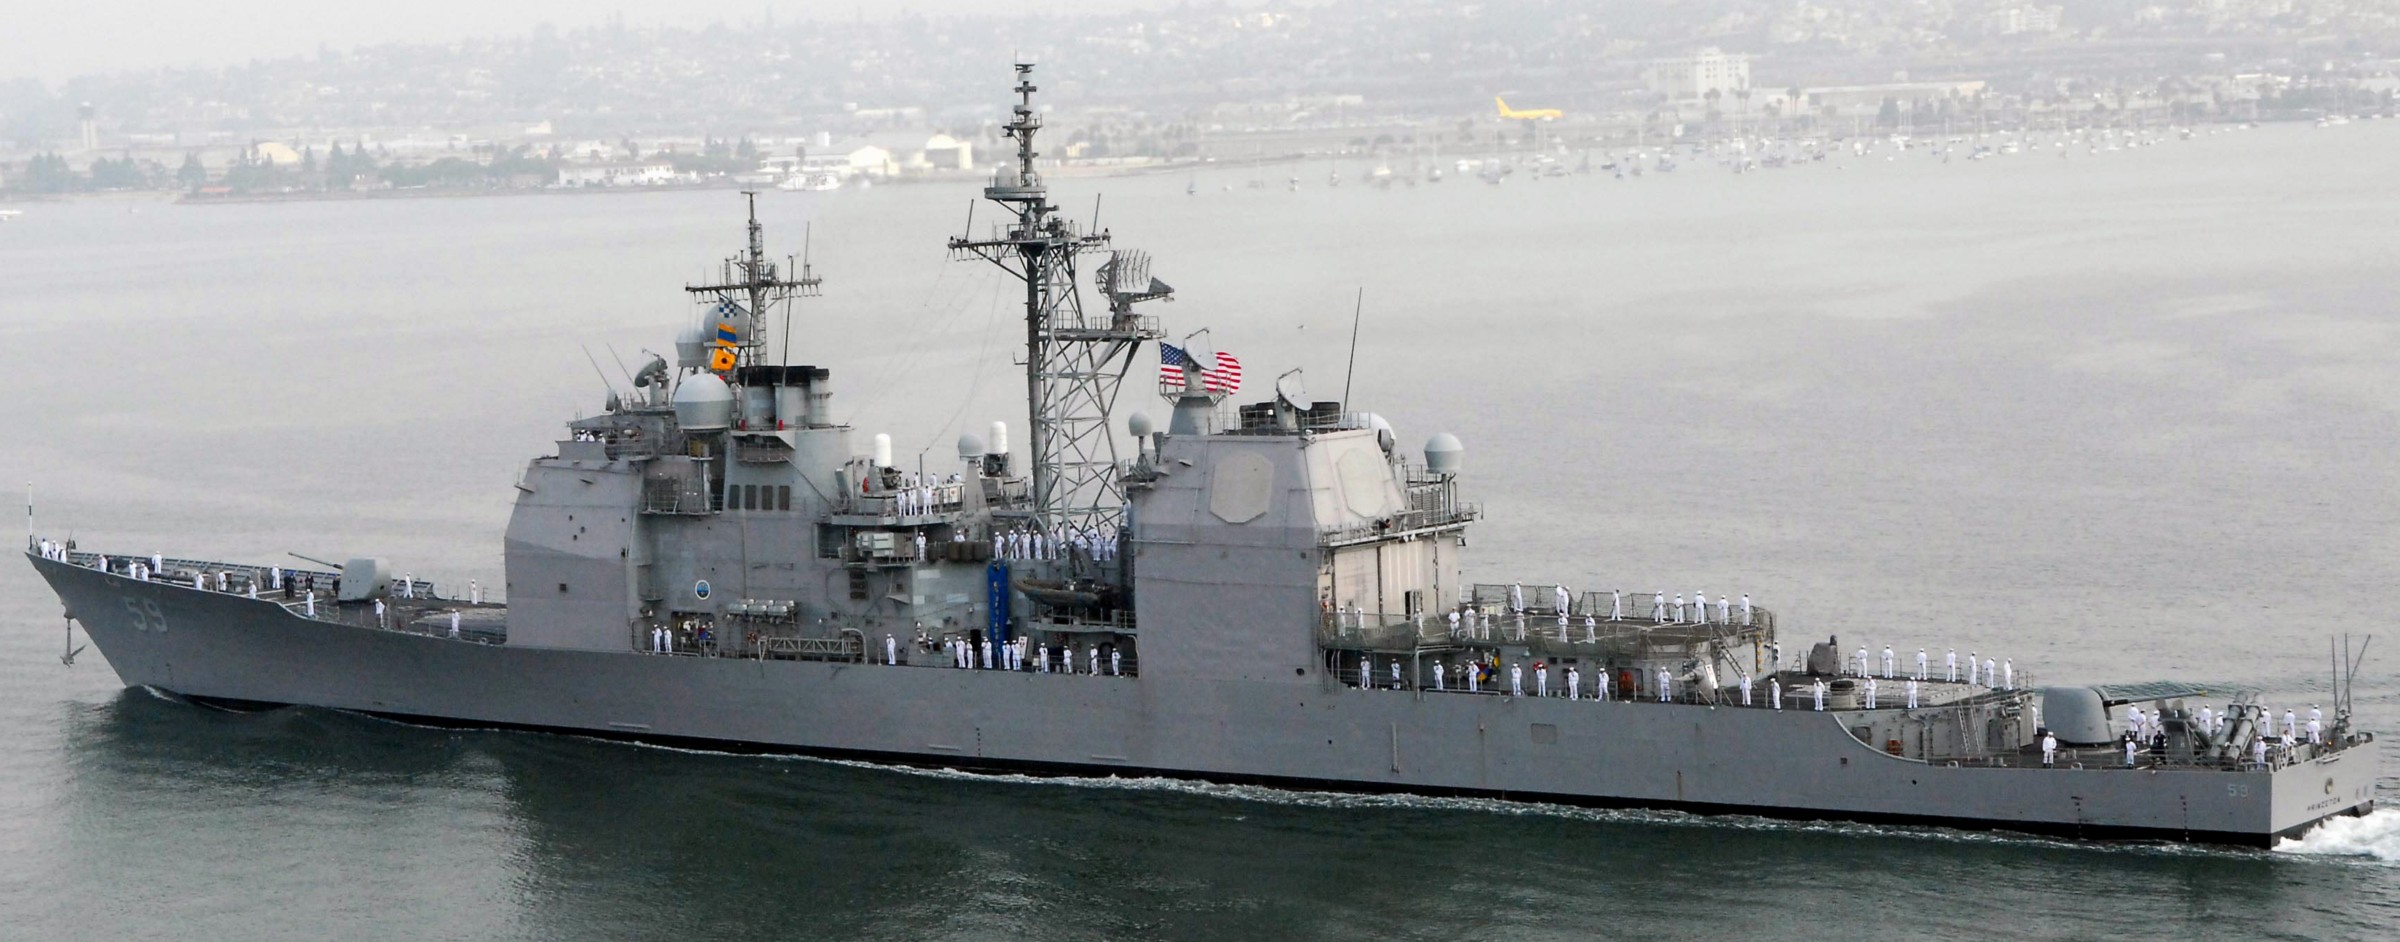 cg-59 uss princeton ticonderoga class guided missile cruiser aegis us navy san diego 12